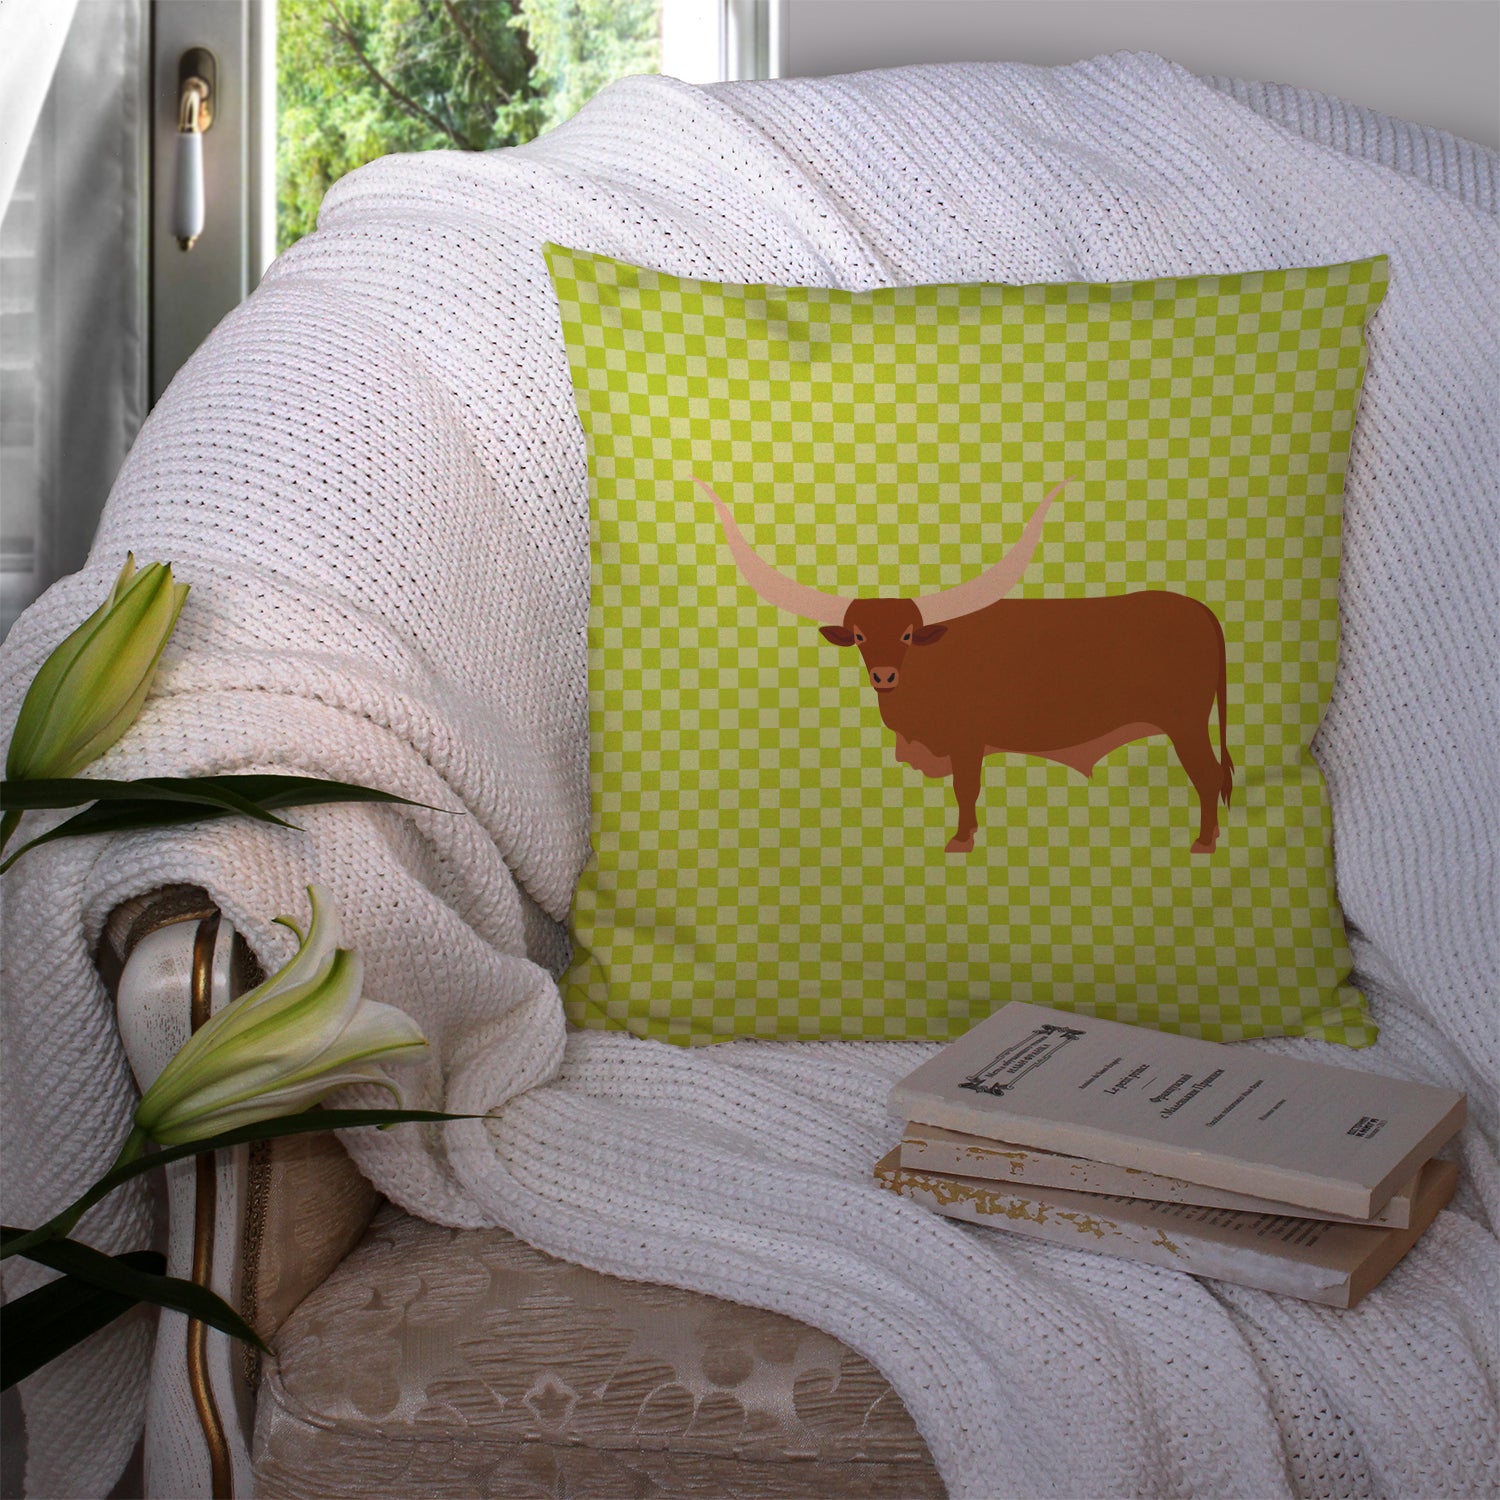 Ankole-Watusu Cow Green Fabric Decorative Pillow BB7649PW1414 - the-store.com